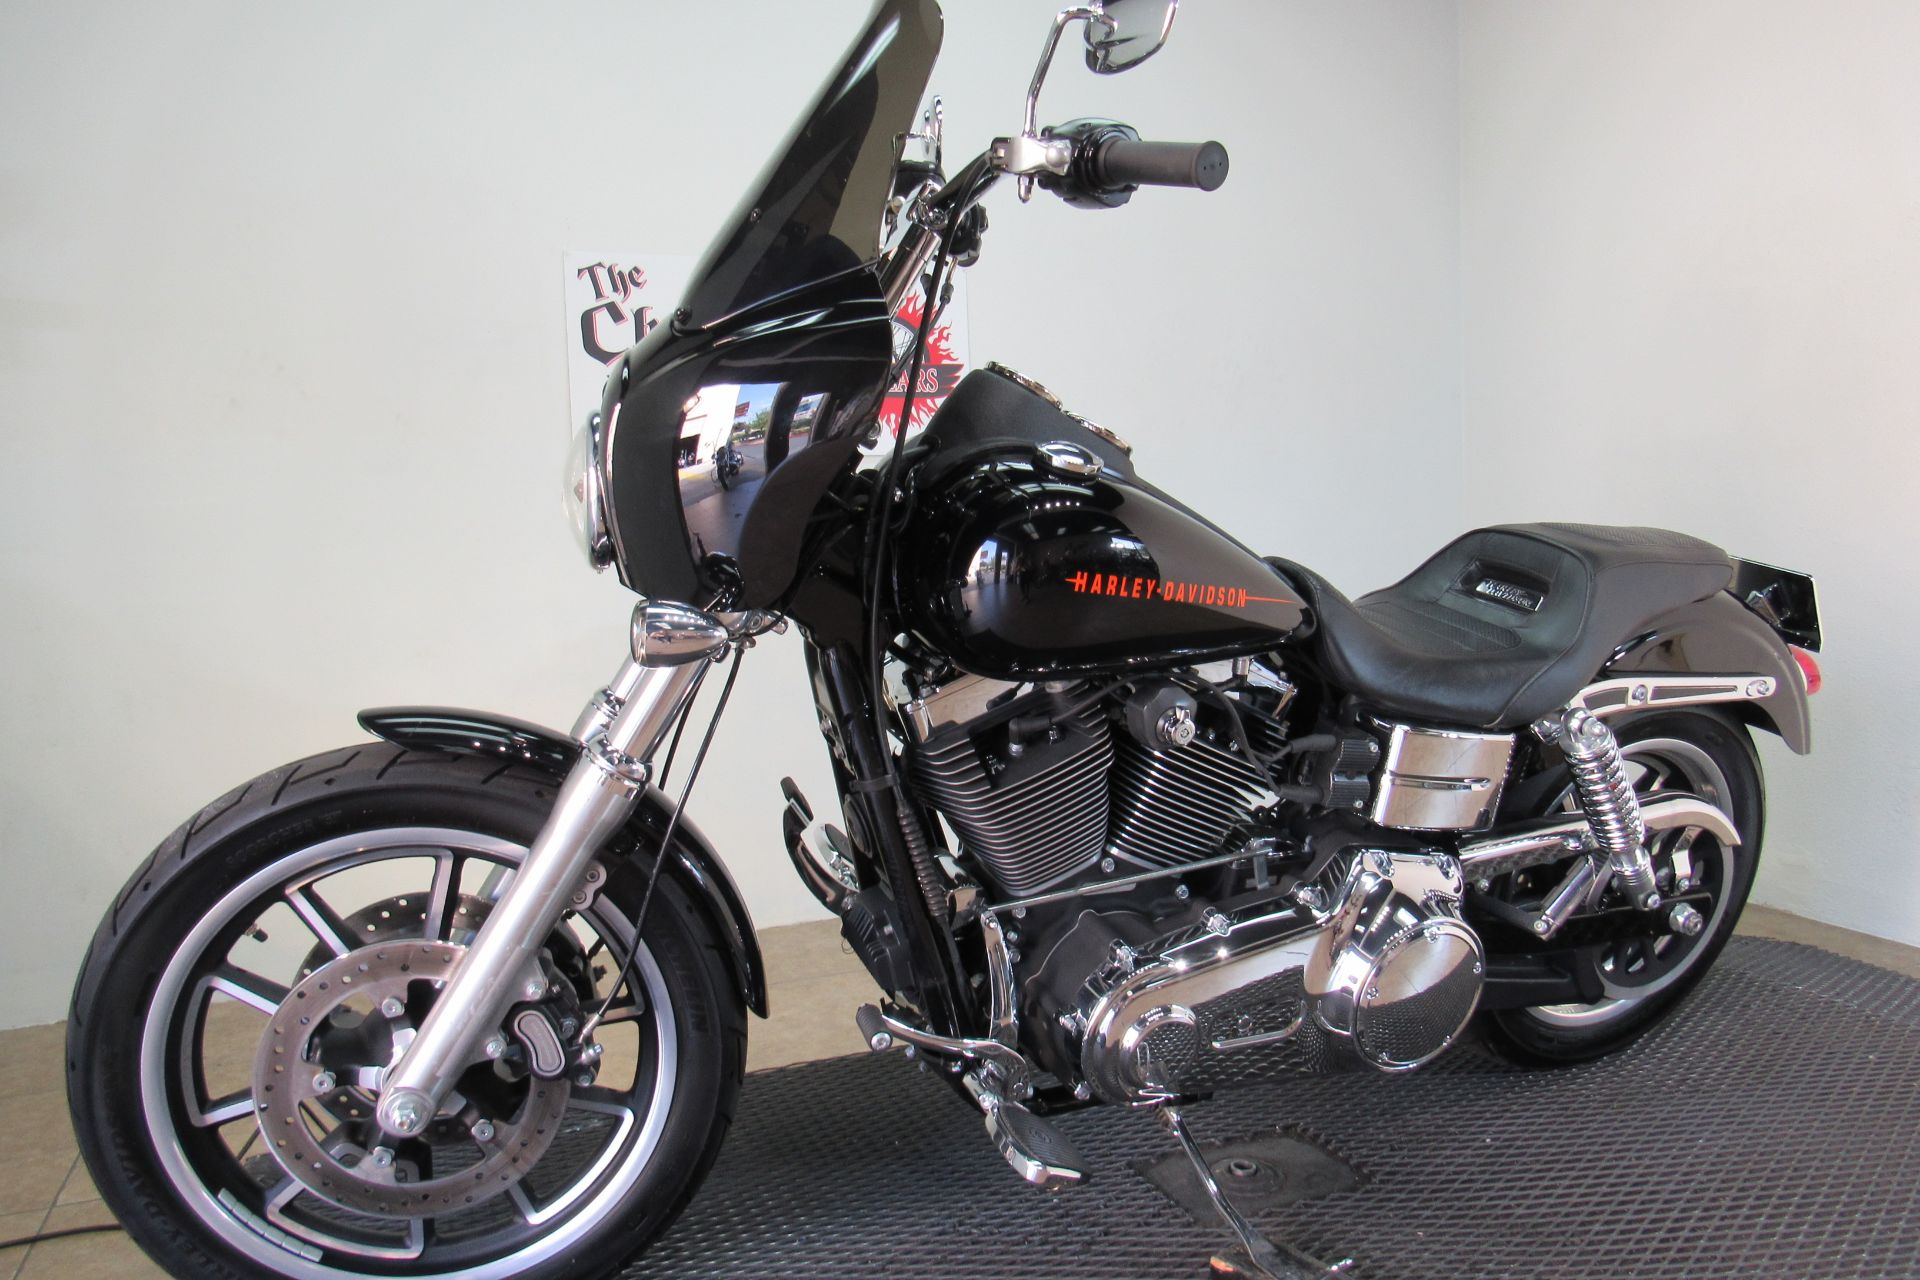 2014 Harley-Davidson Low Rider in Temecula, California - Photo 4